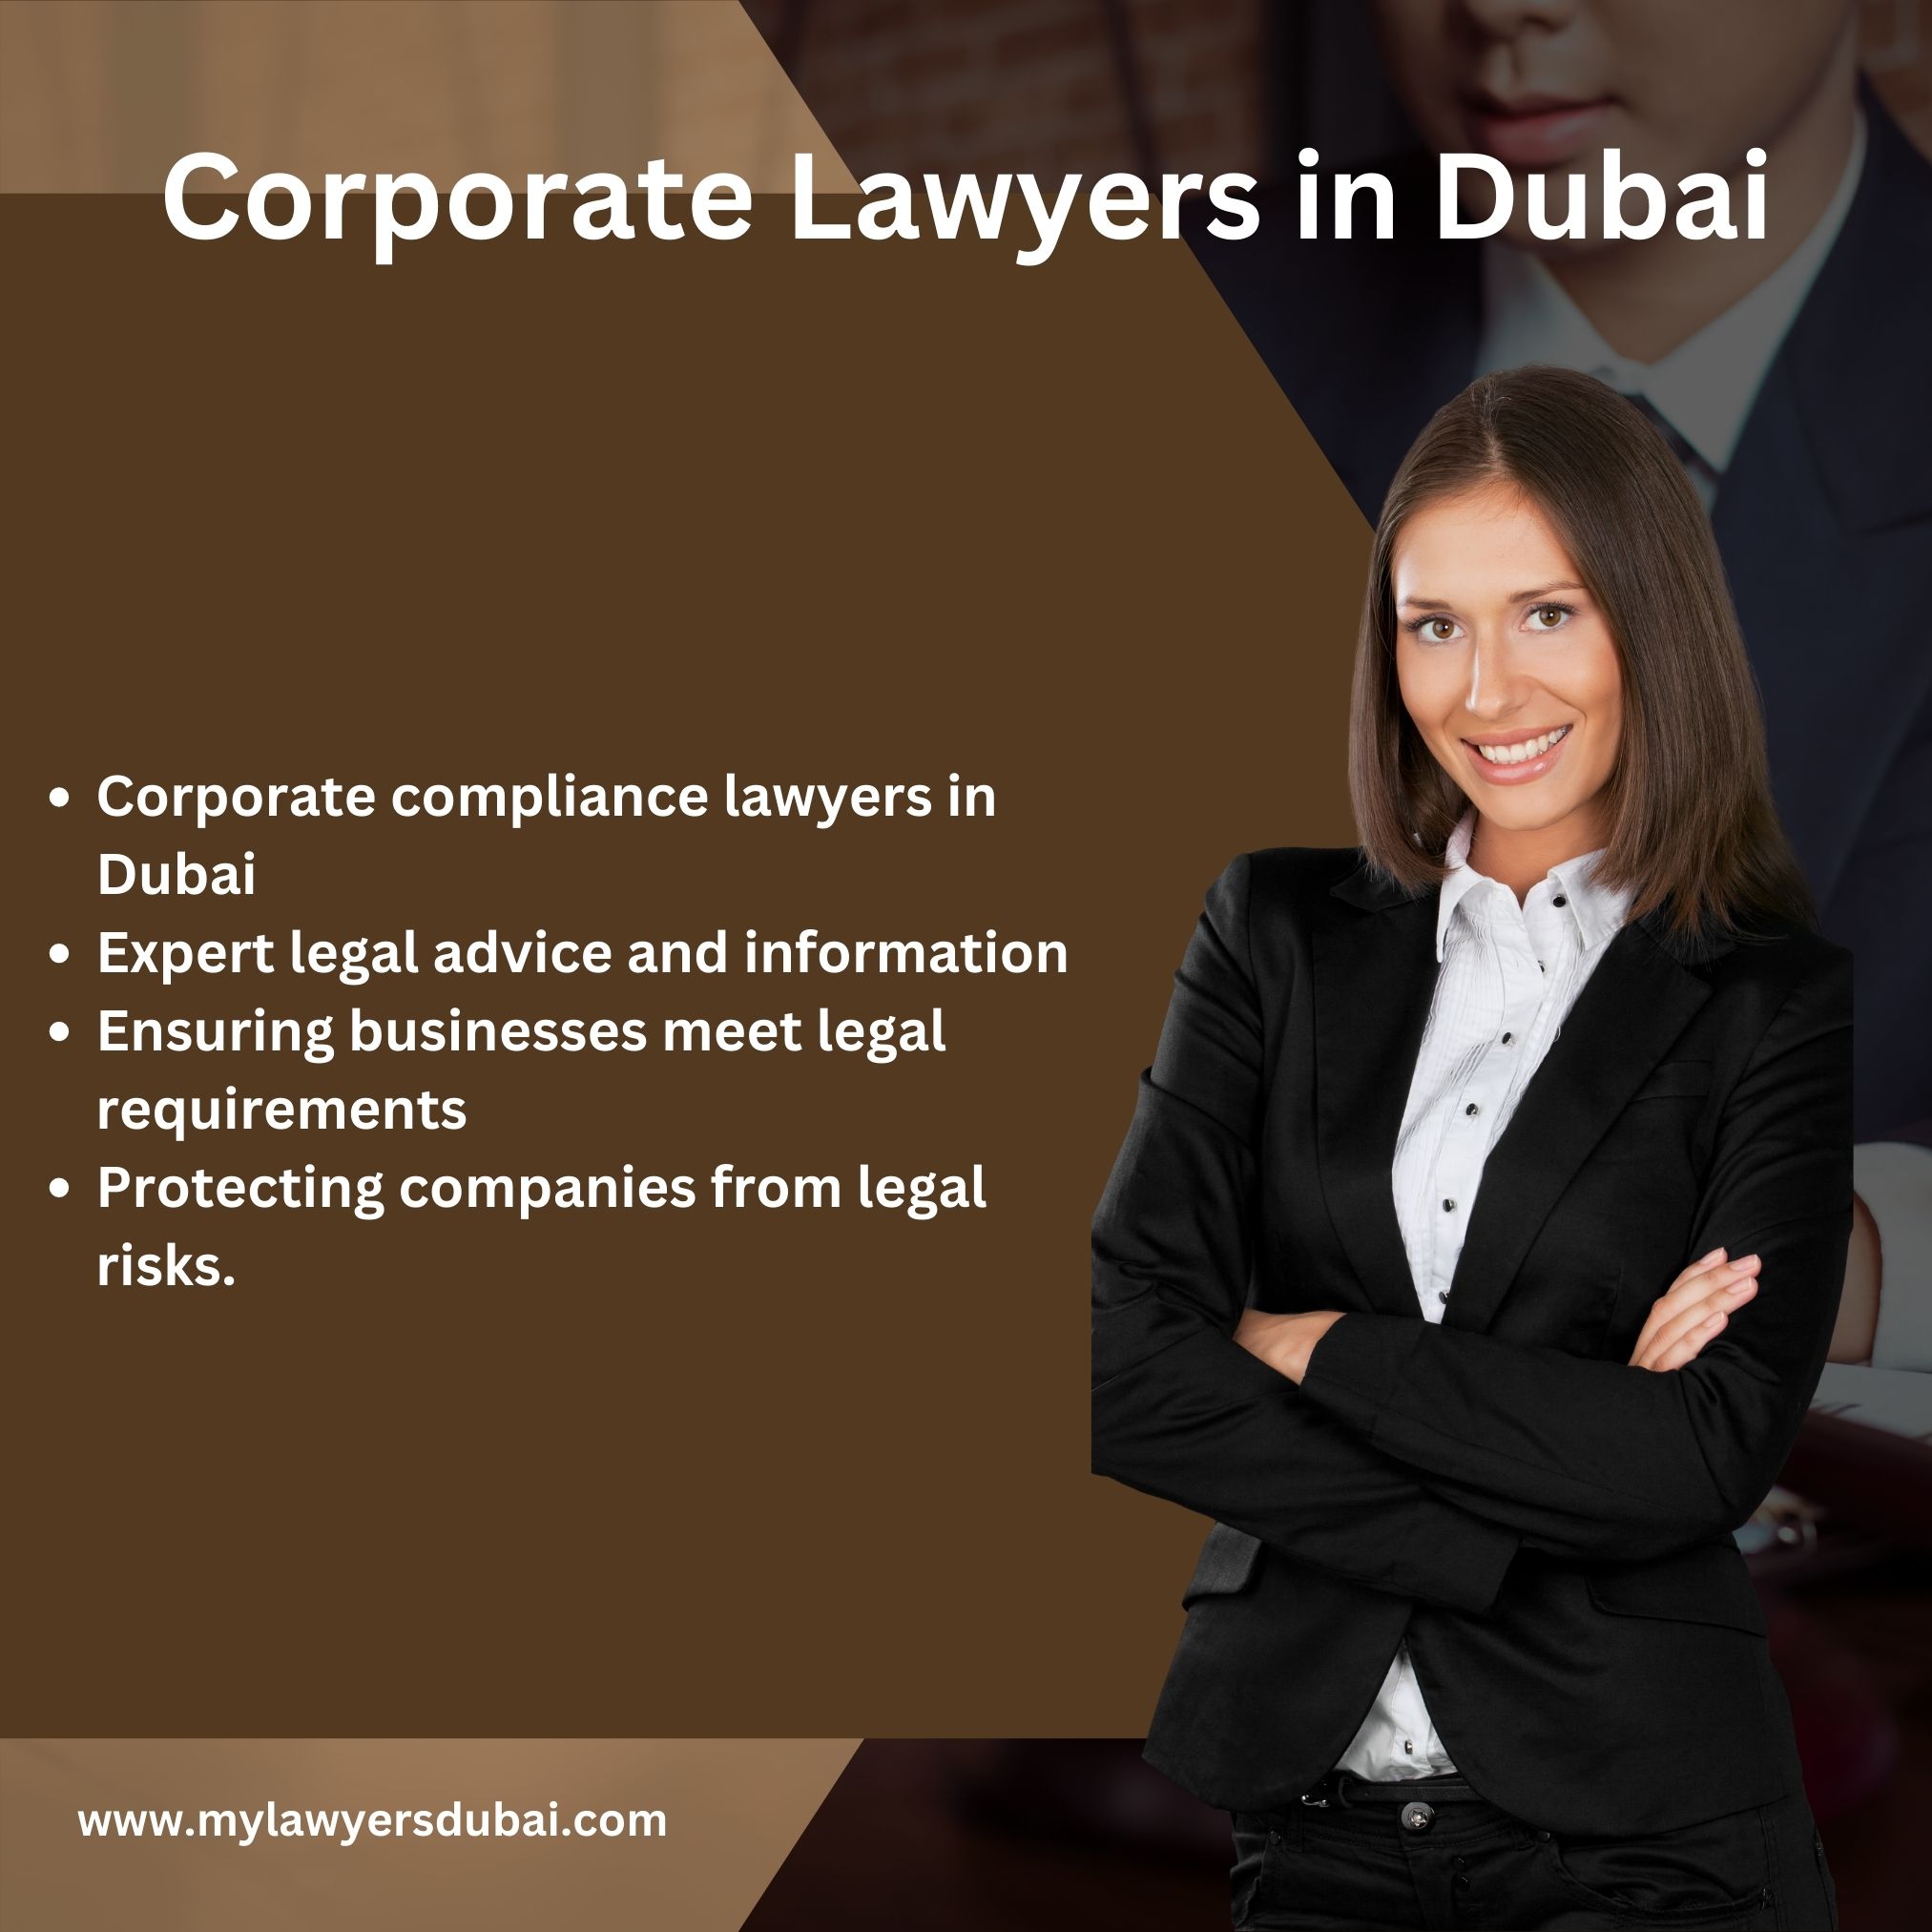 Corporate compliance lawyers in Dubai